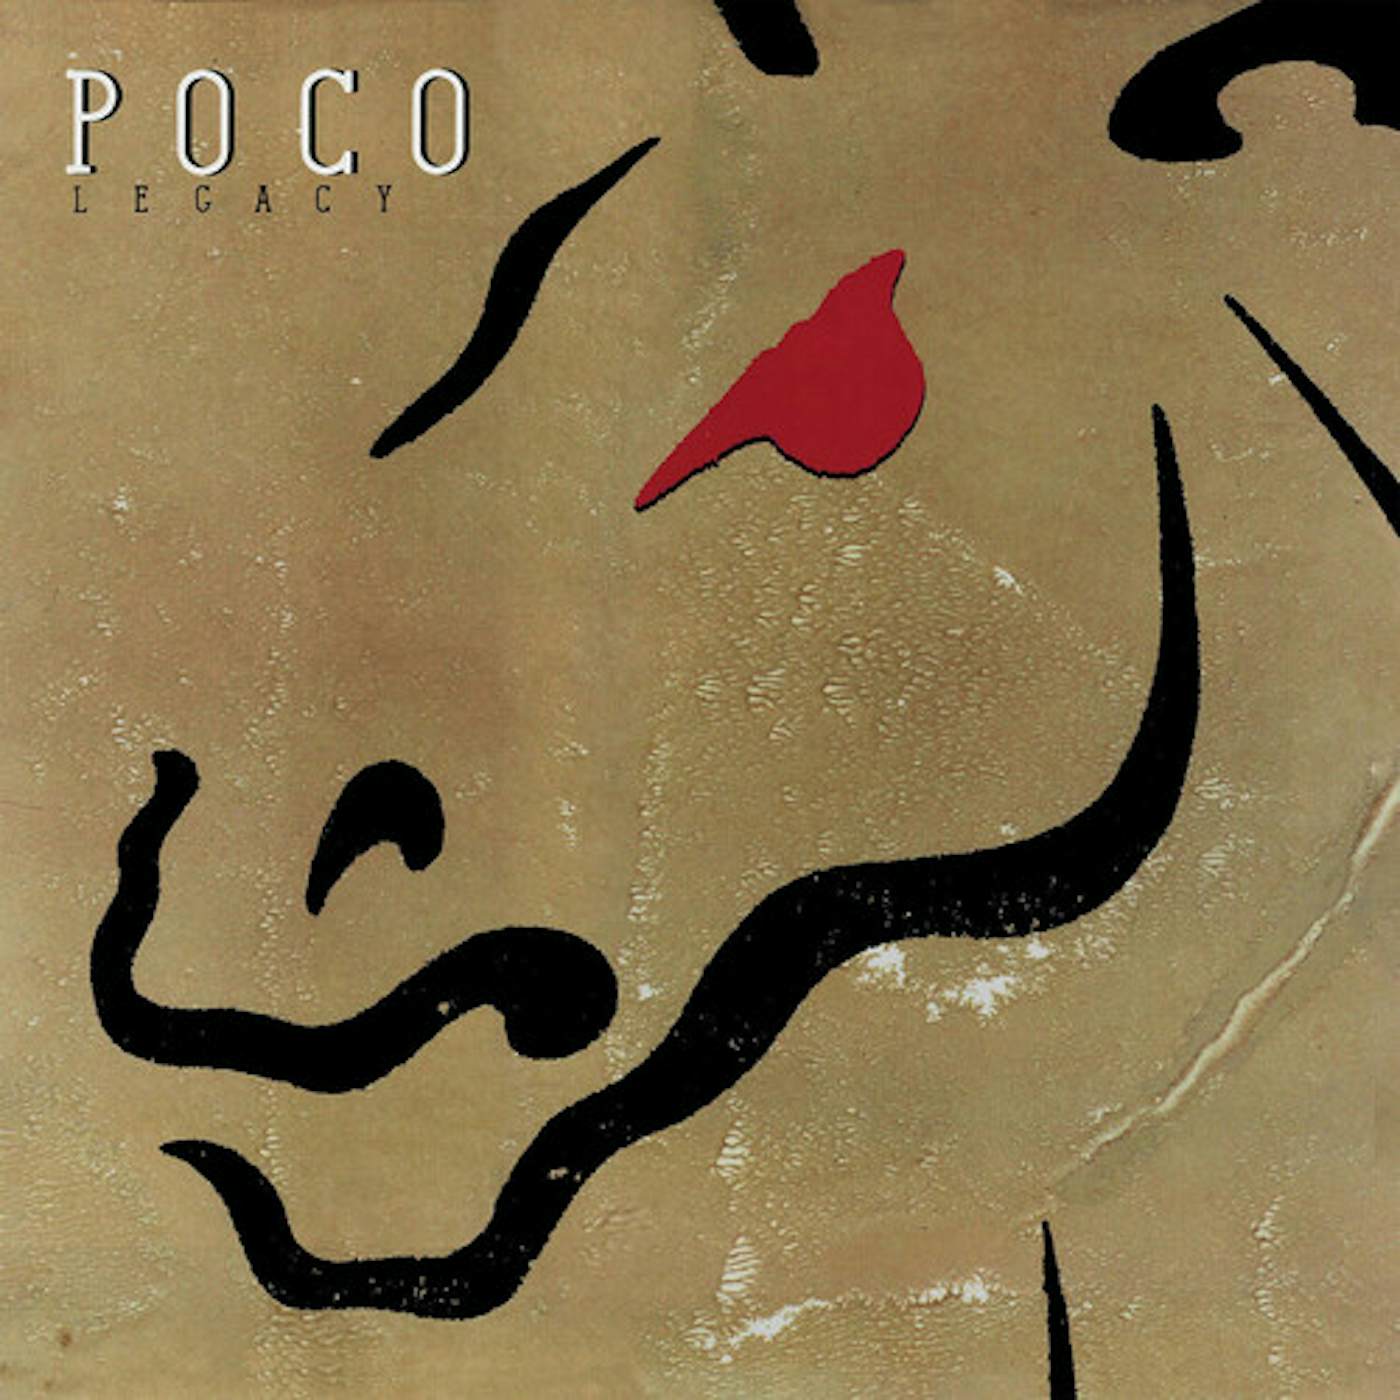 Poco Legacy Vinyl Record